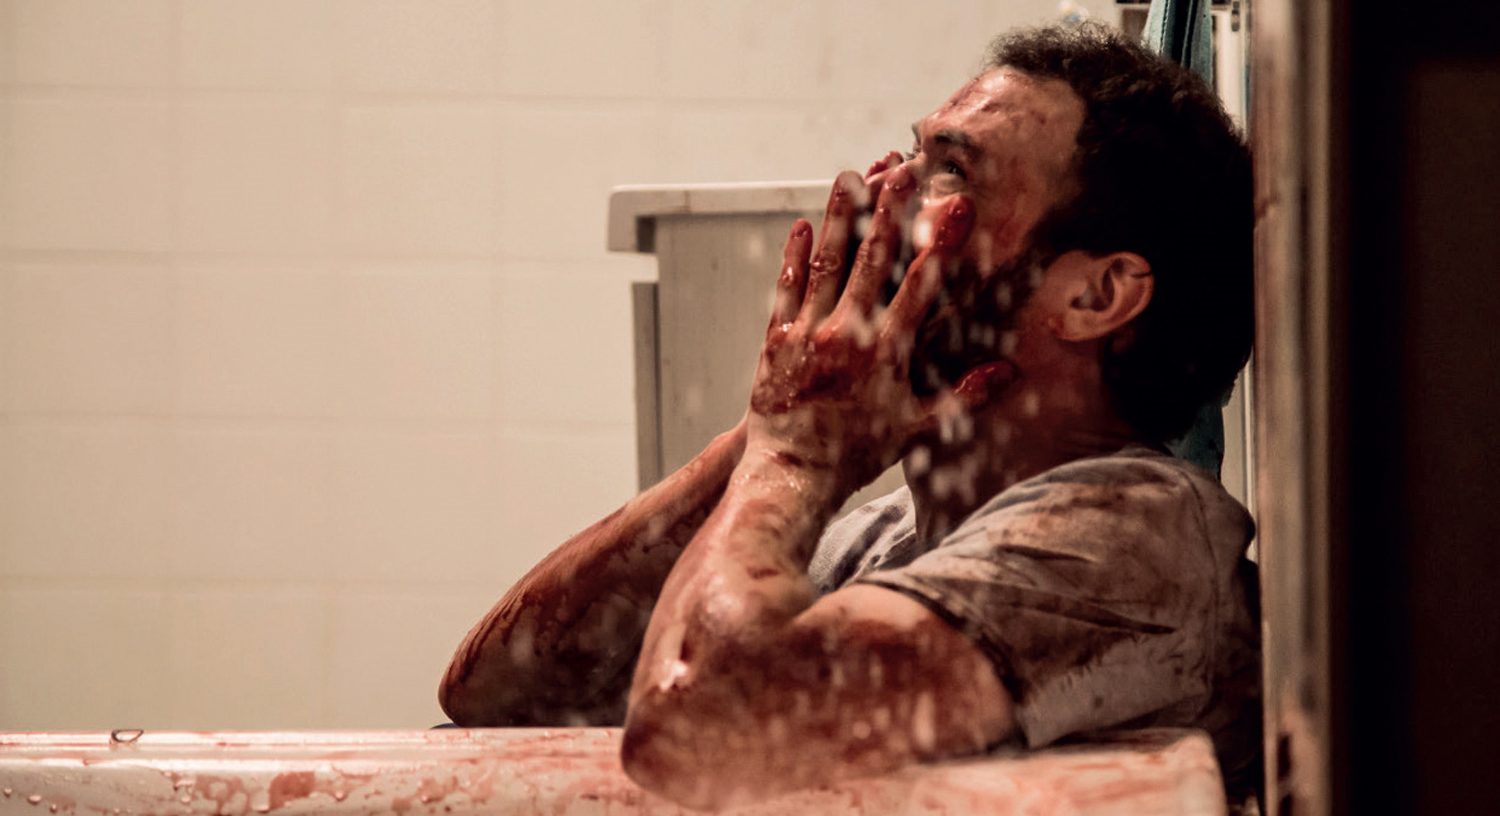 bloody scene in tub, terrified movie